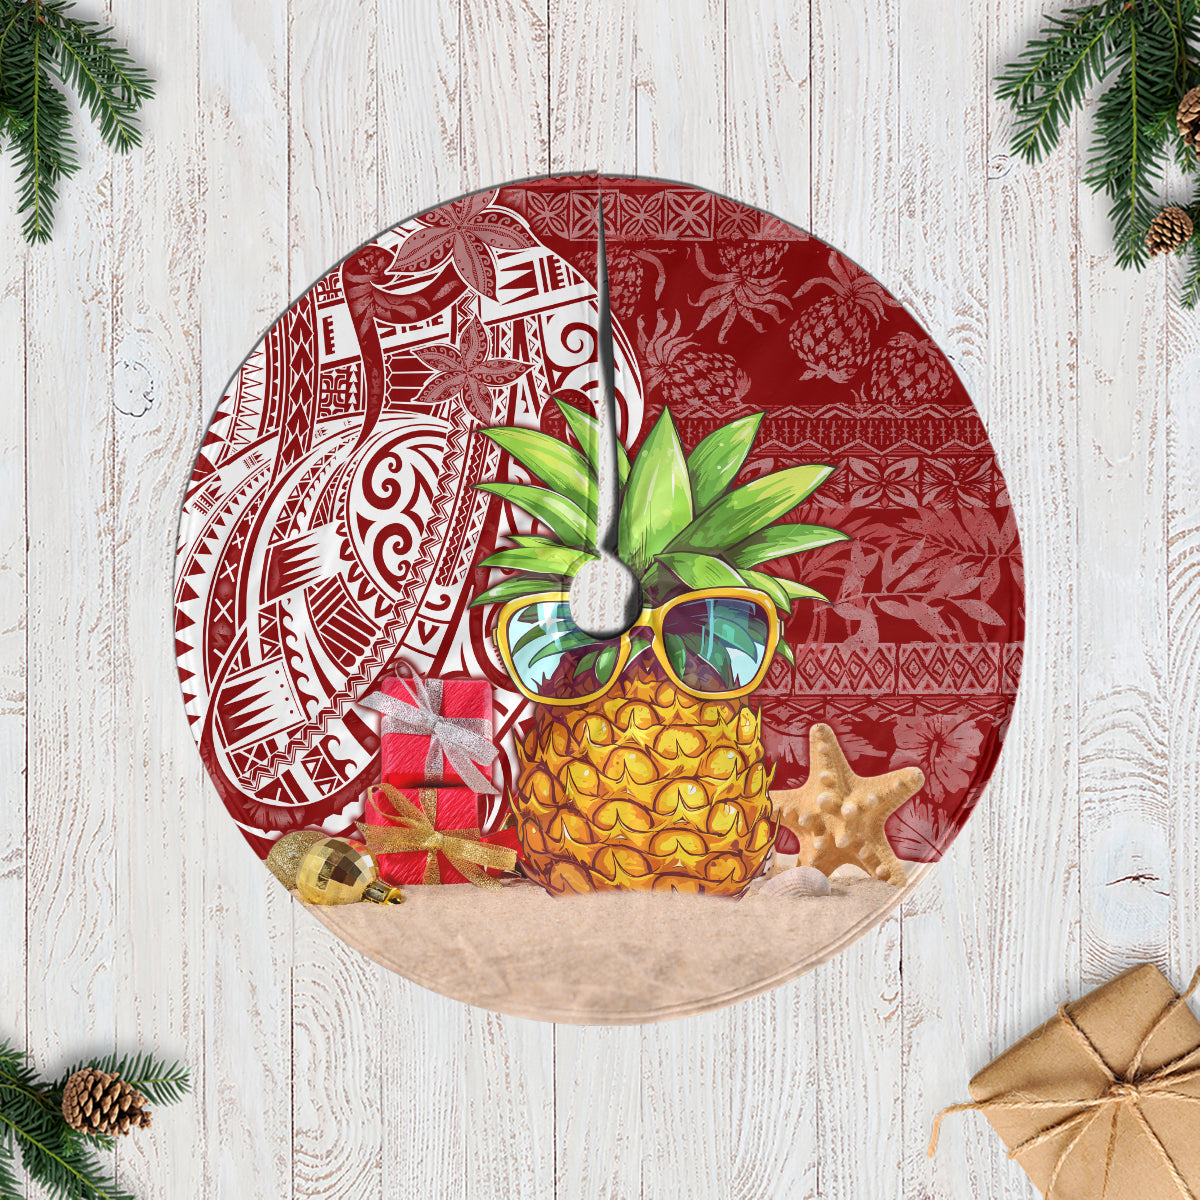 Mele Kalikimaka Hawaii Christmas Tree Skirt Pineapple Party LT7 Casual Tree Skirts Red - Polynesian Pride